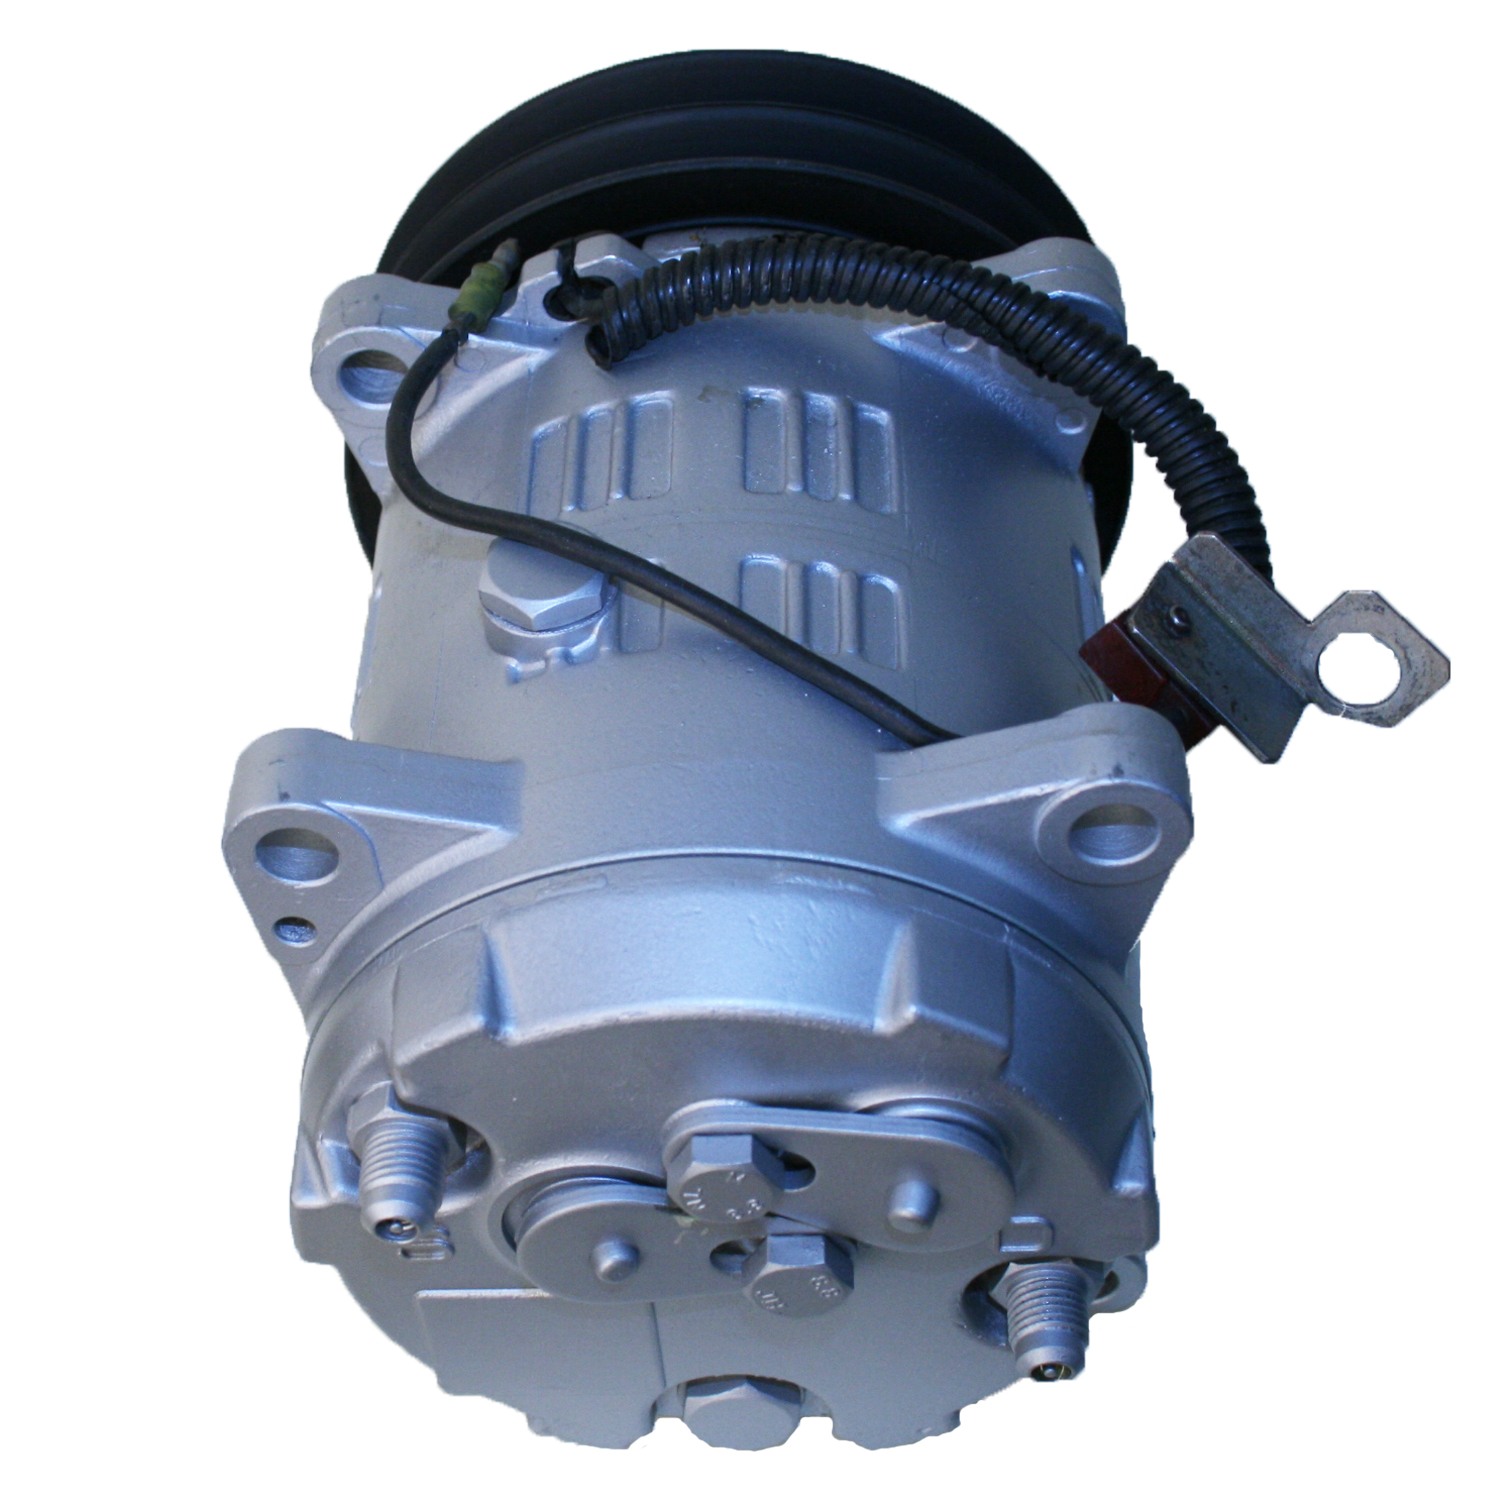 TCW Compressor 12043.201 Remanufactured Product Image field_60b6a13a6e67c